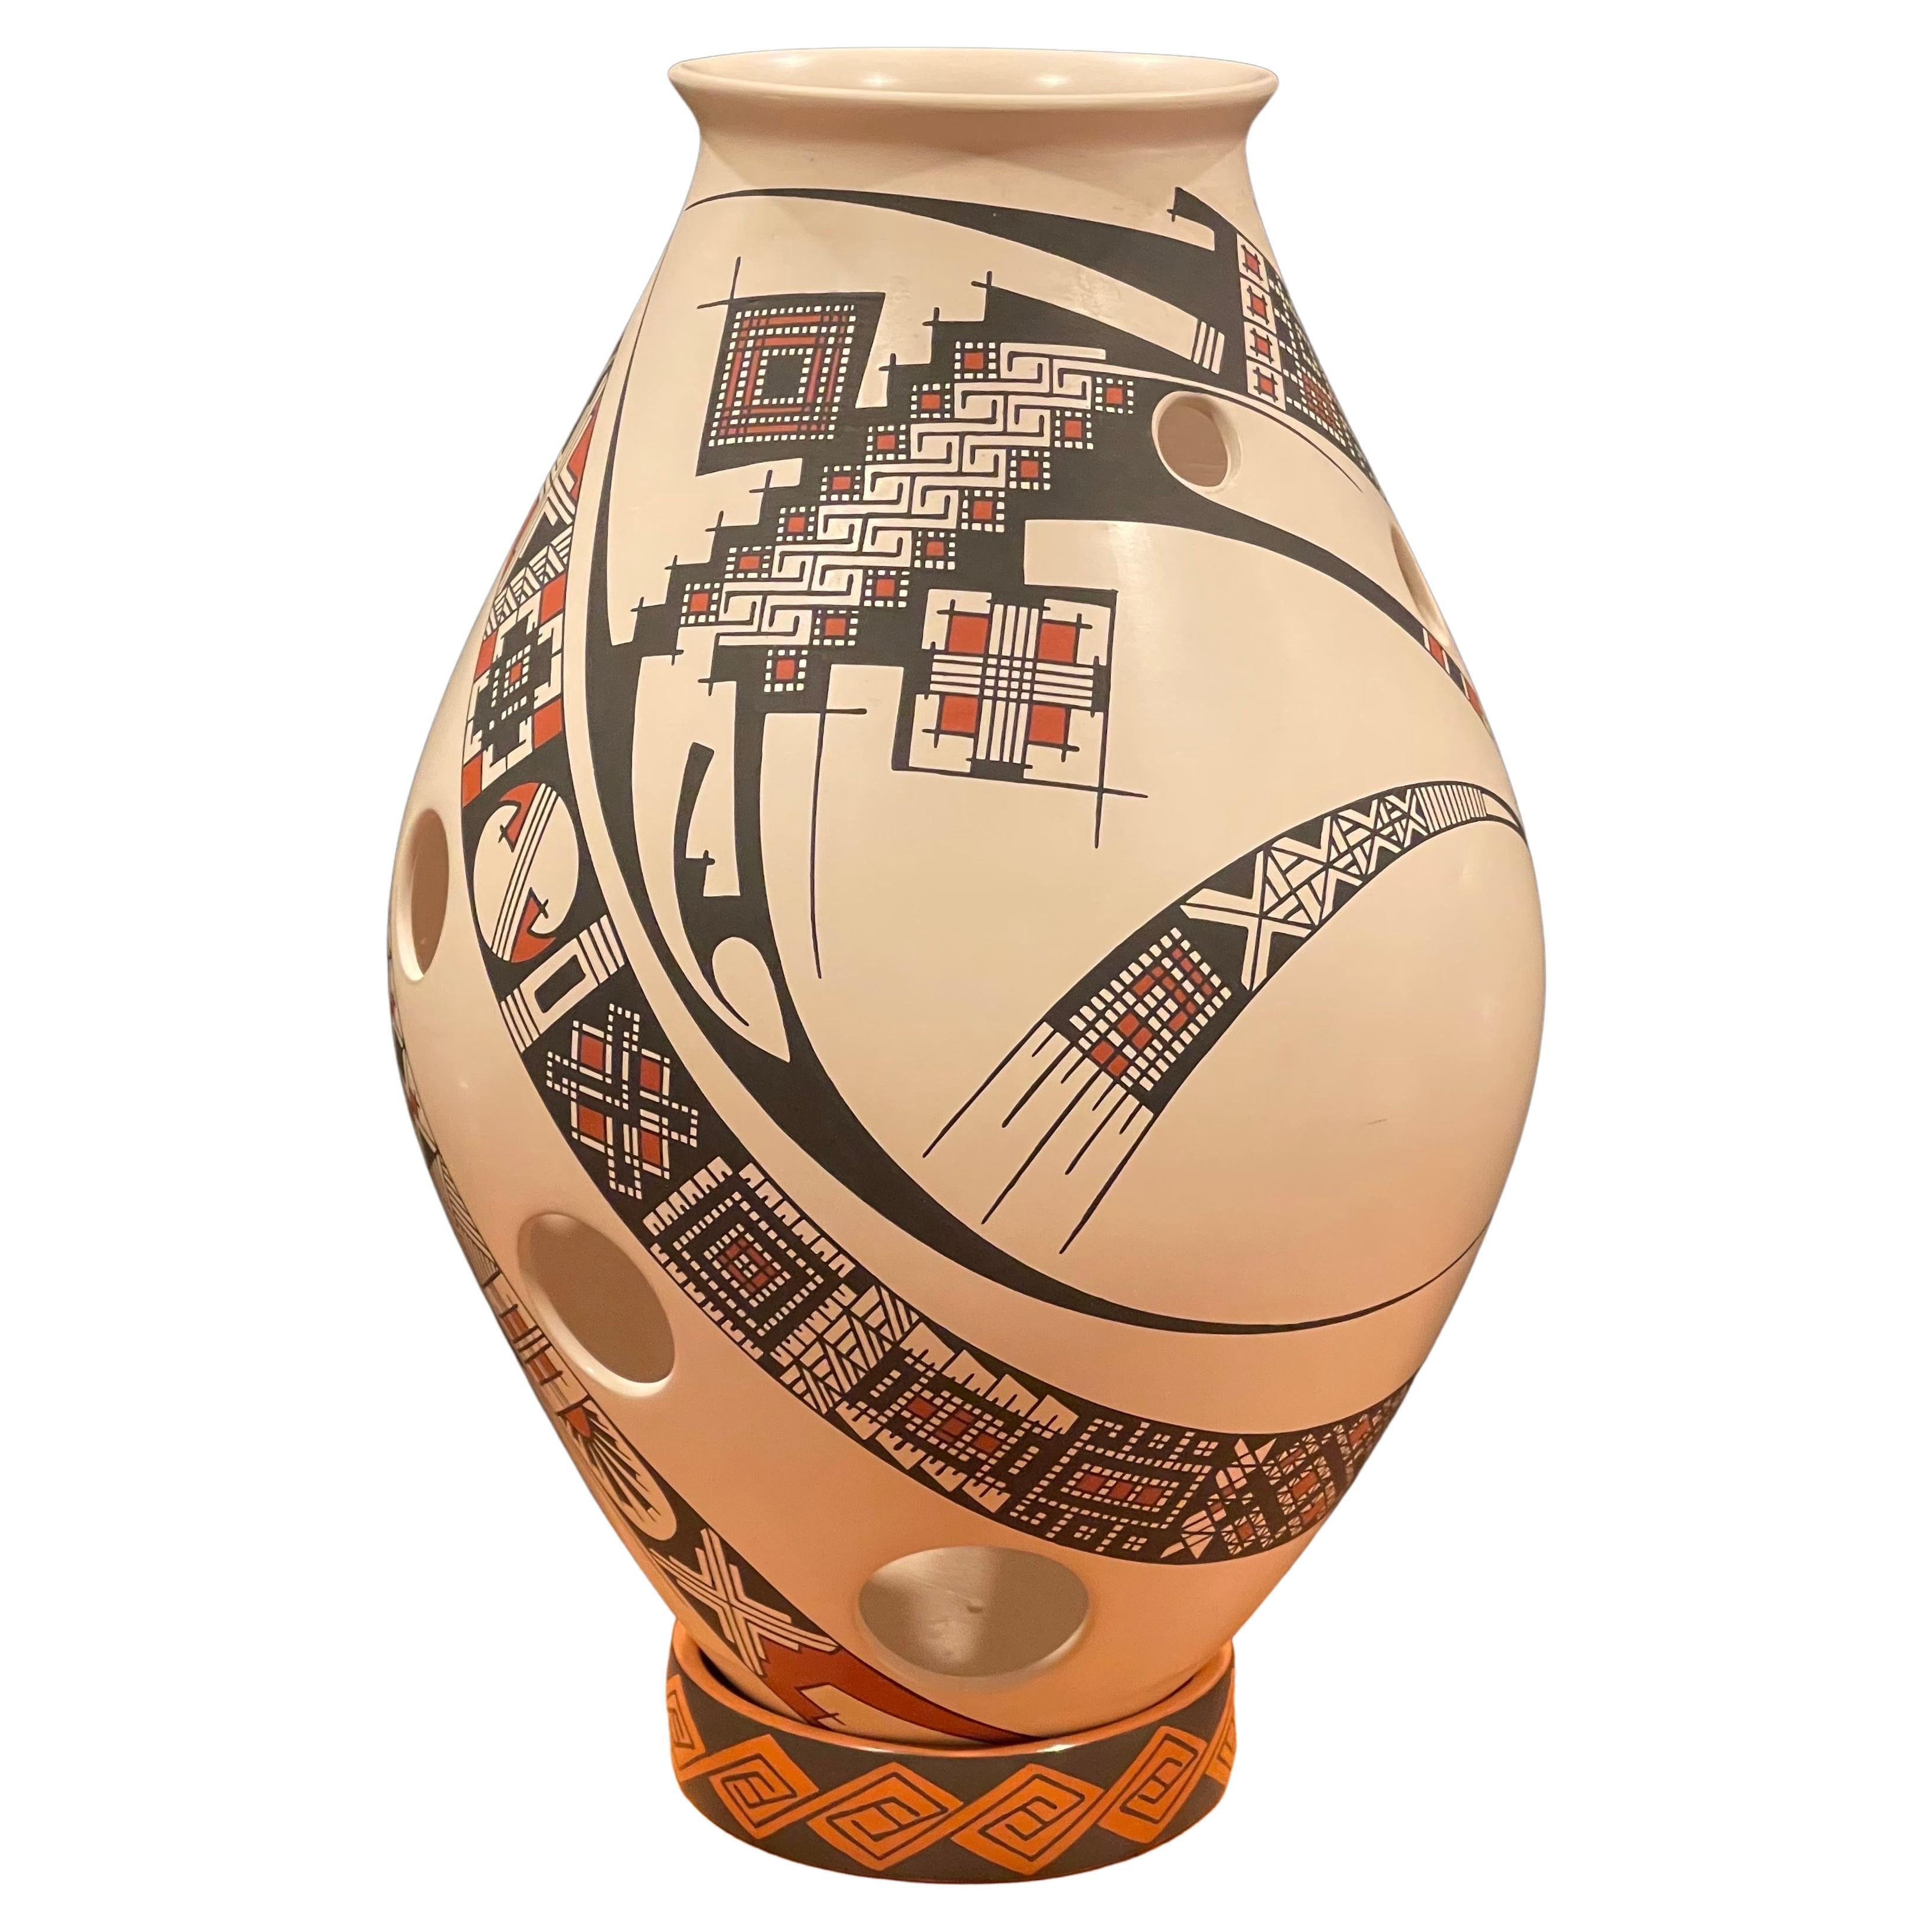 Großes ""Paquime Pottery"-Gefäß / Olla von Damian E. Quezada für Mata Ortiz